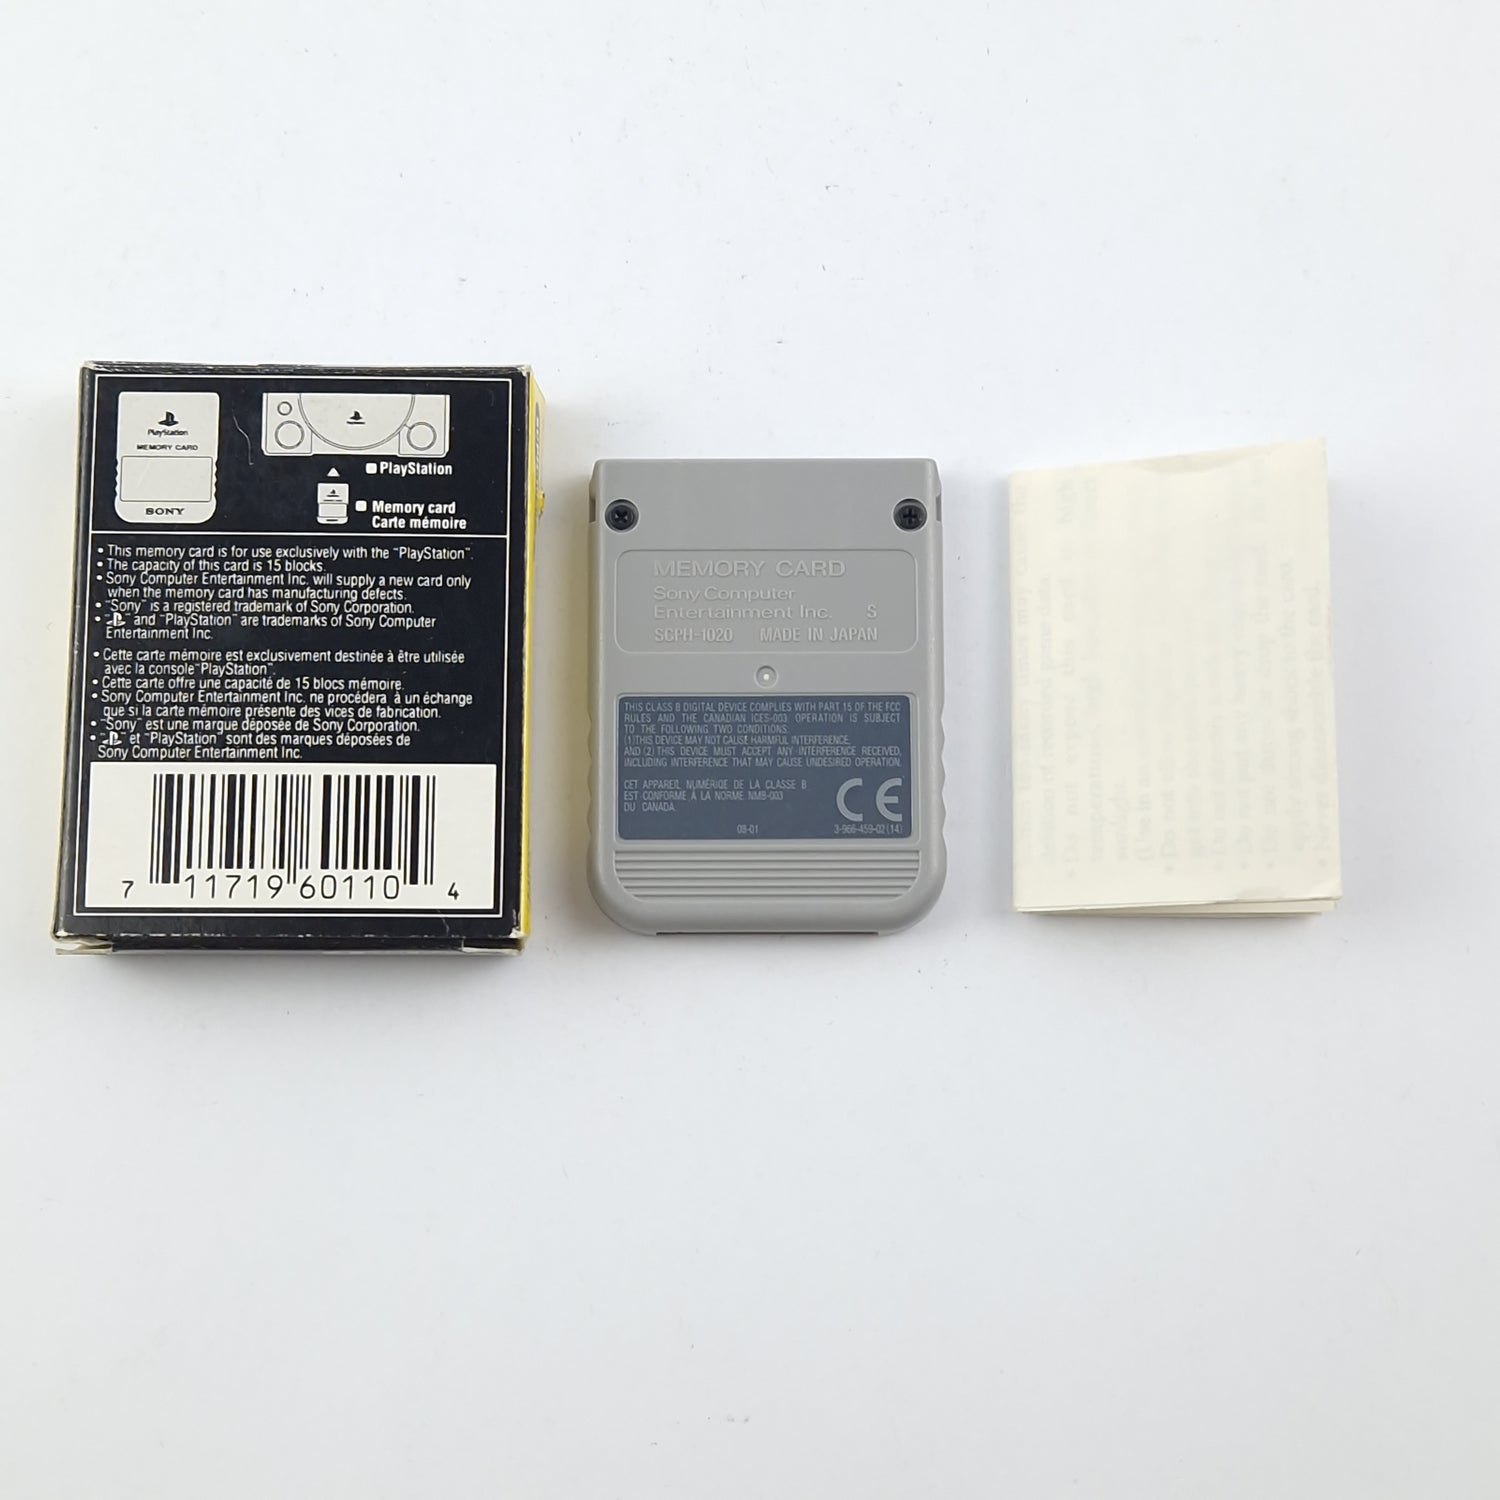 Playstation 1 memory card: Memory Card Gray with original packaging - Sony PS1 PAL